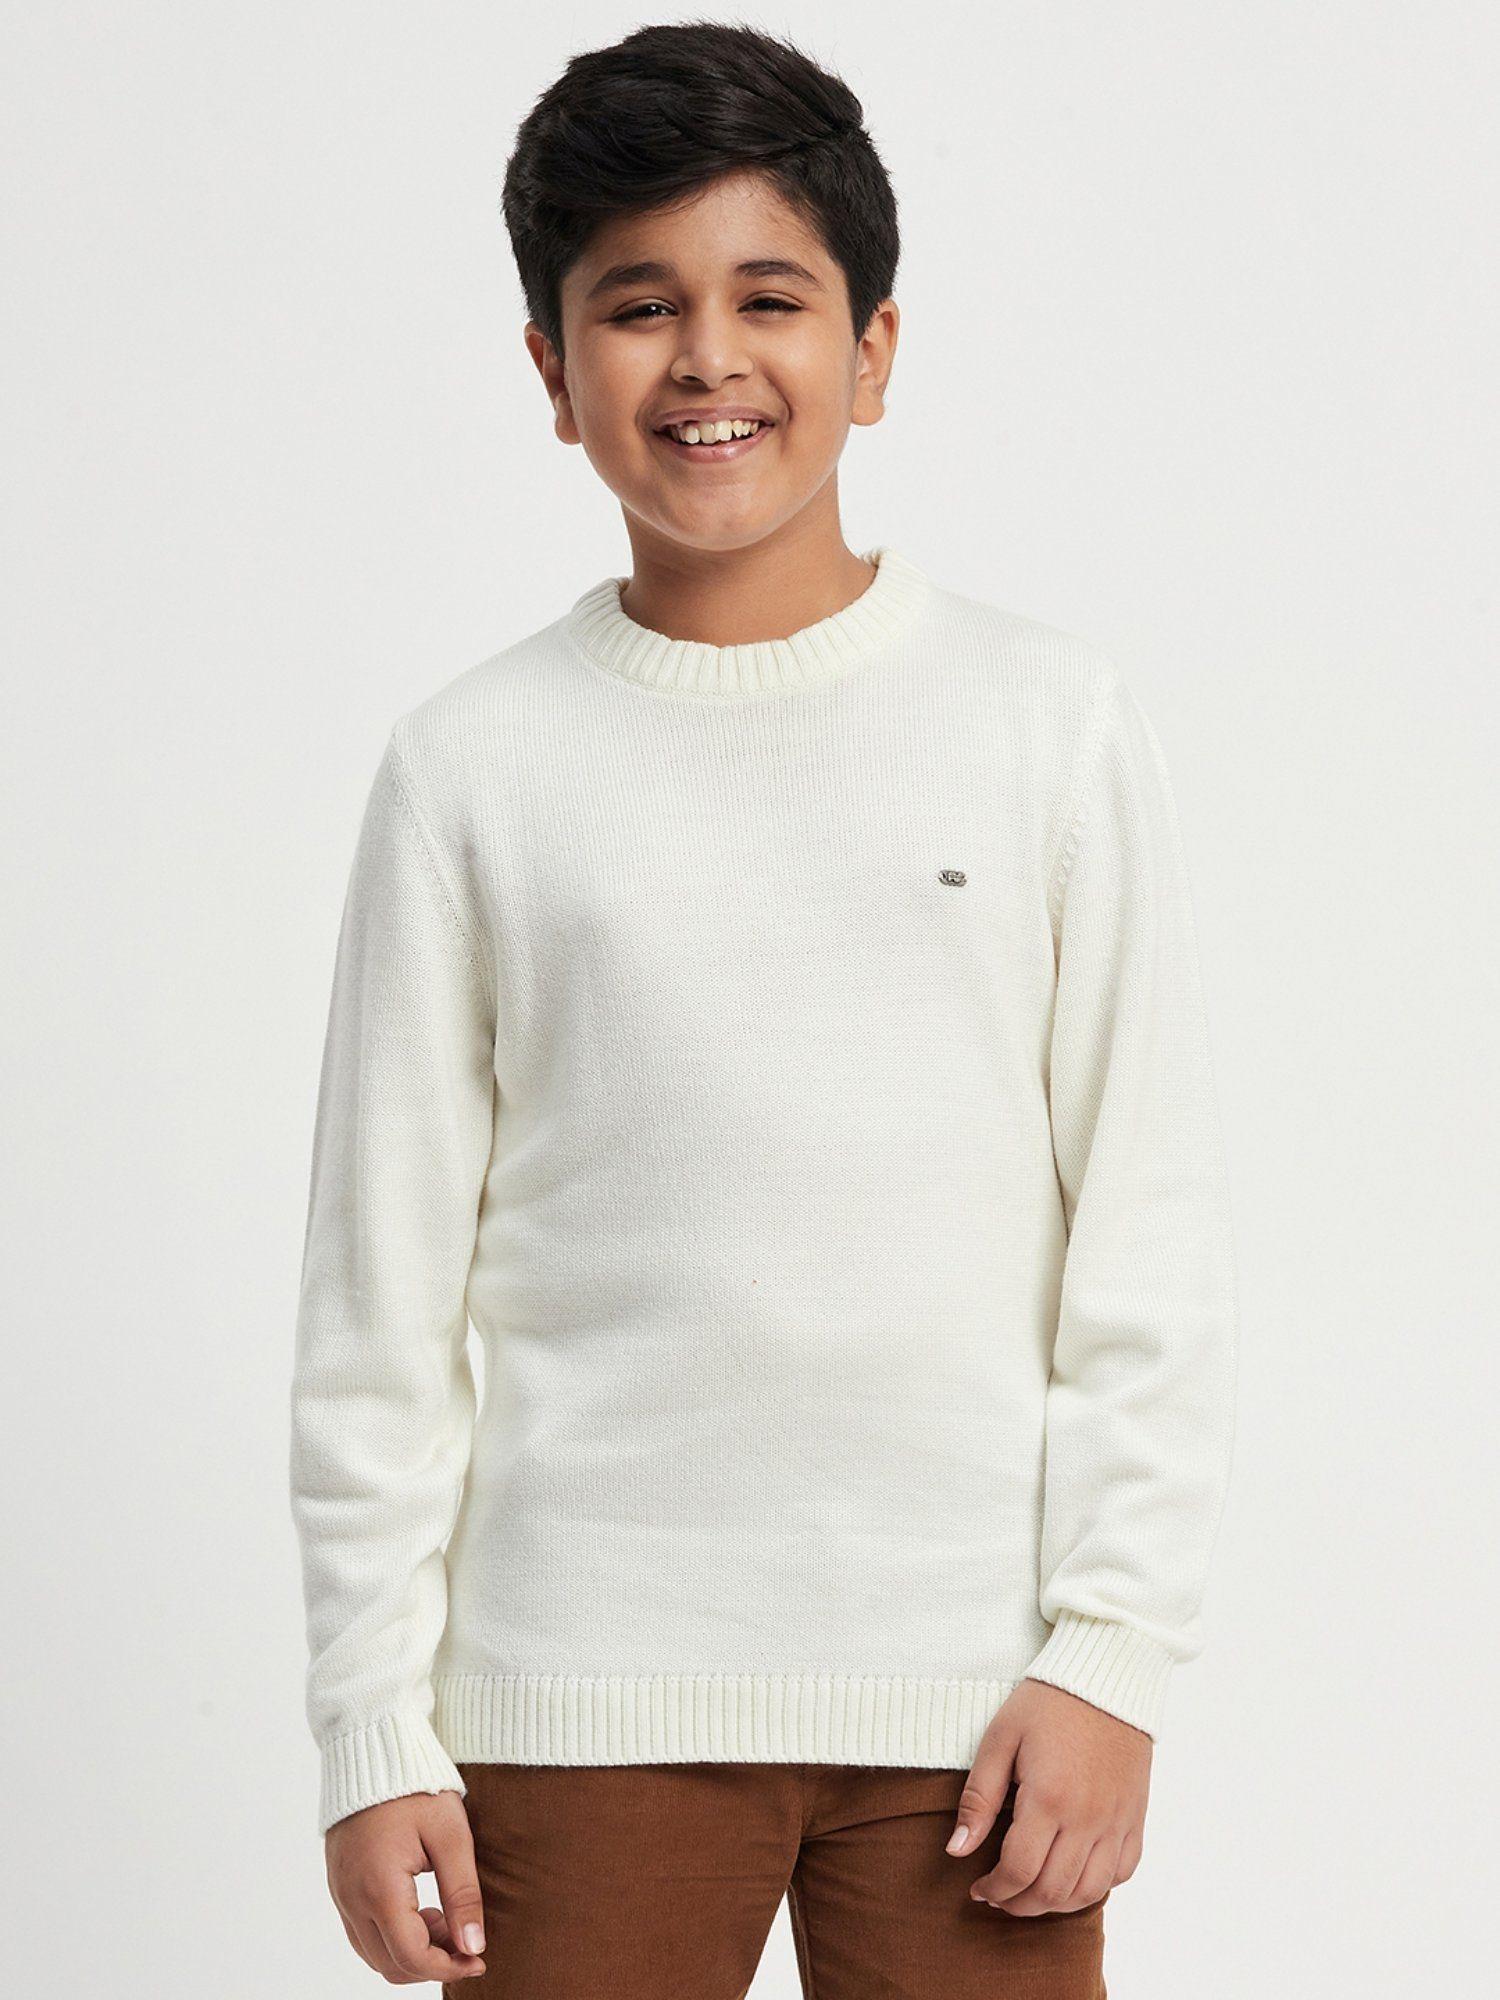 unisex-white-woven-full-sleeves-round-neck-sweater